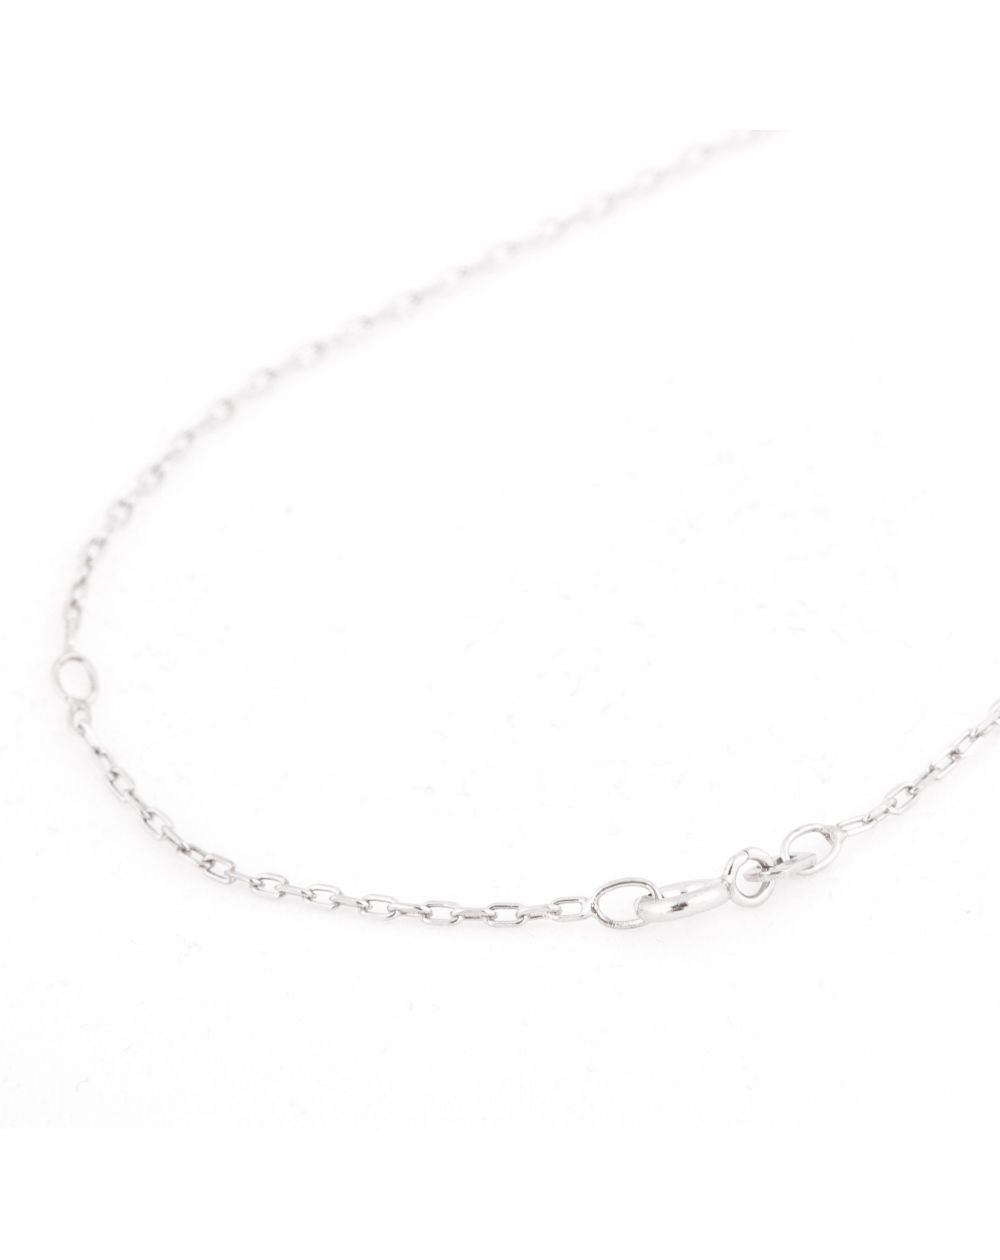 Silver name necklace